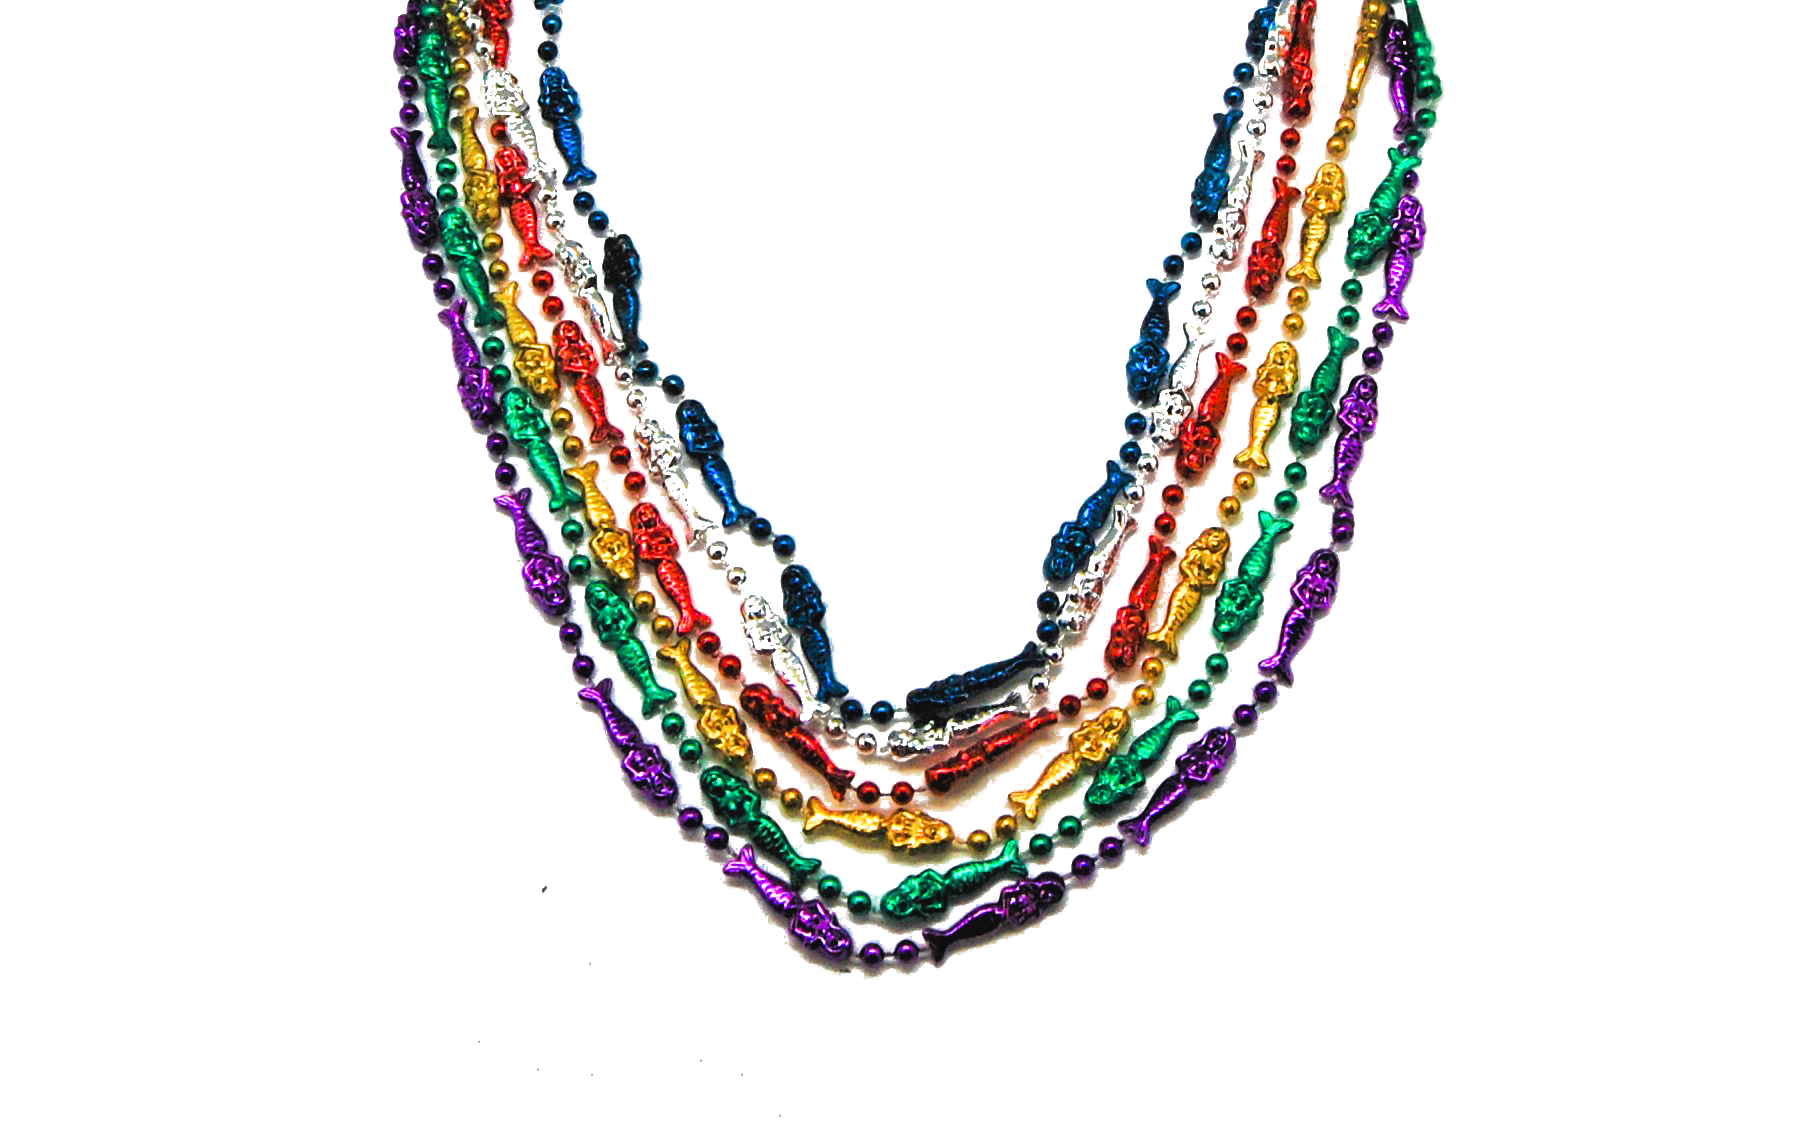 36 Mermaid Beads Assorted Colors